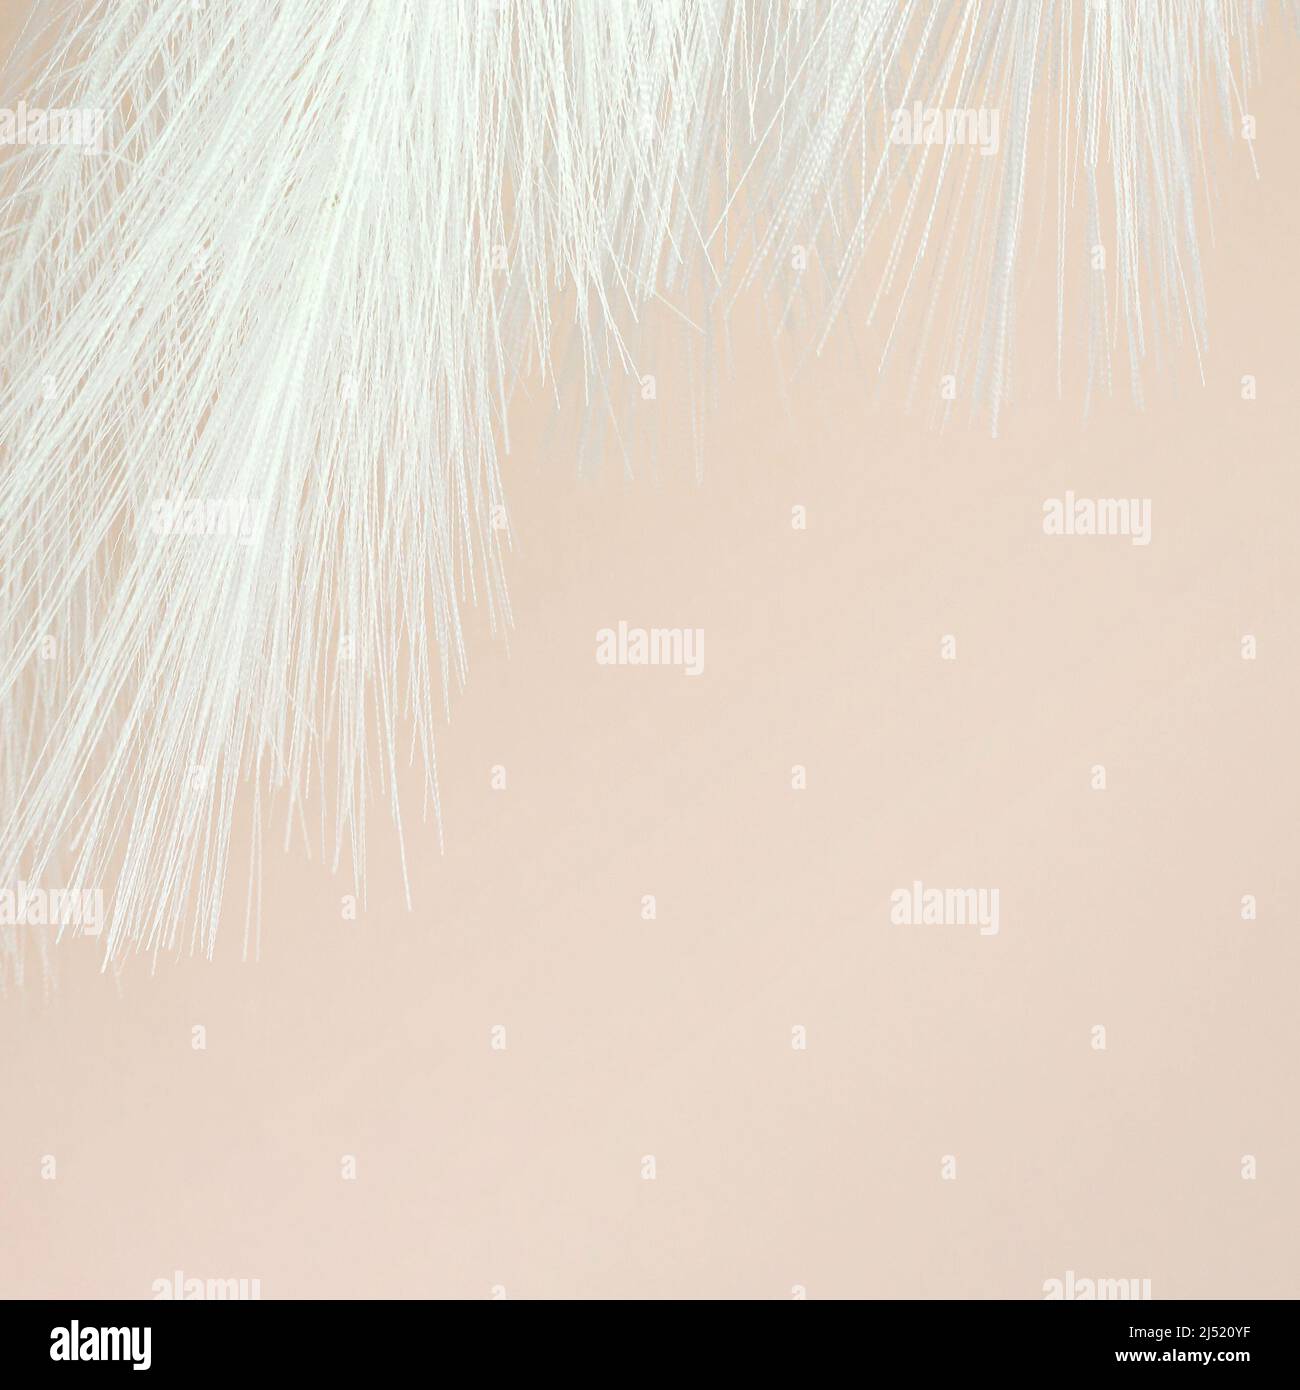 White Fluffy Feather on Pastel beige background. Design art background. Stock Photo